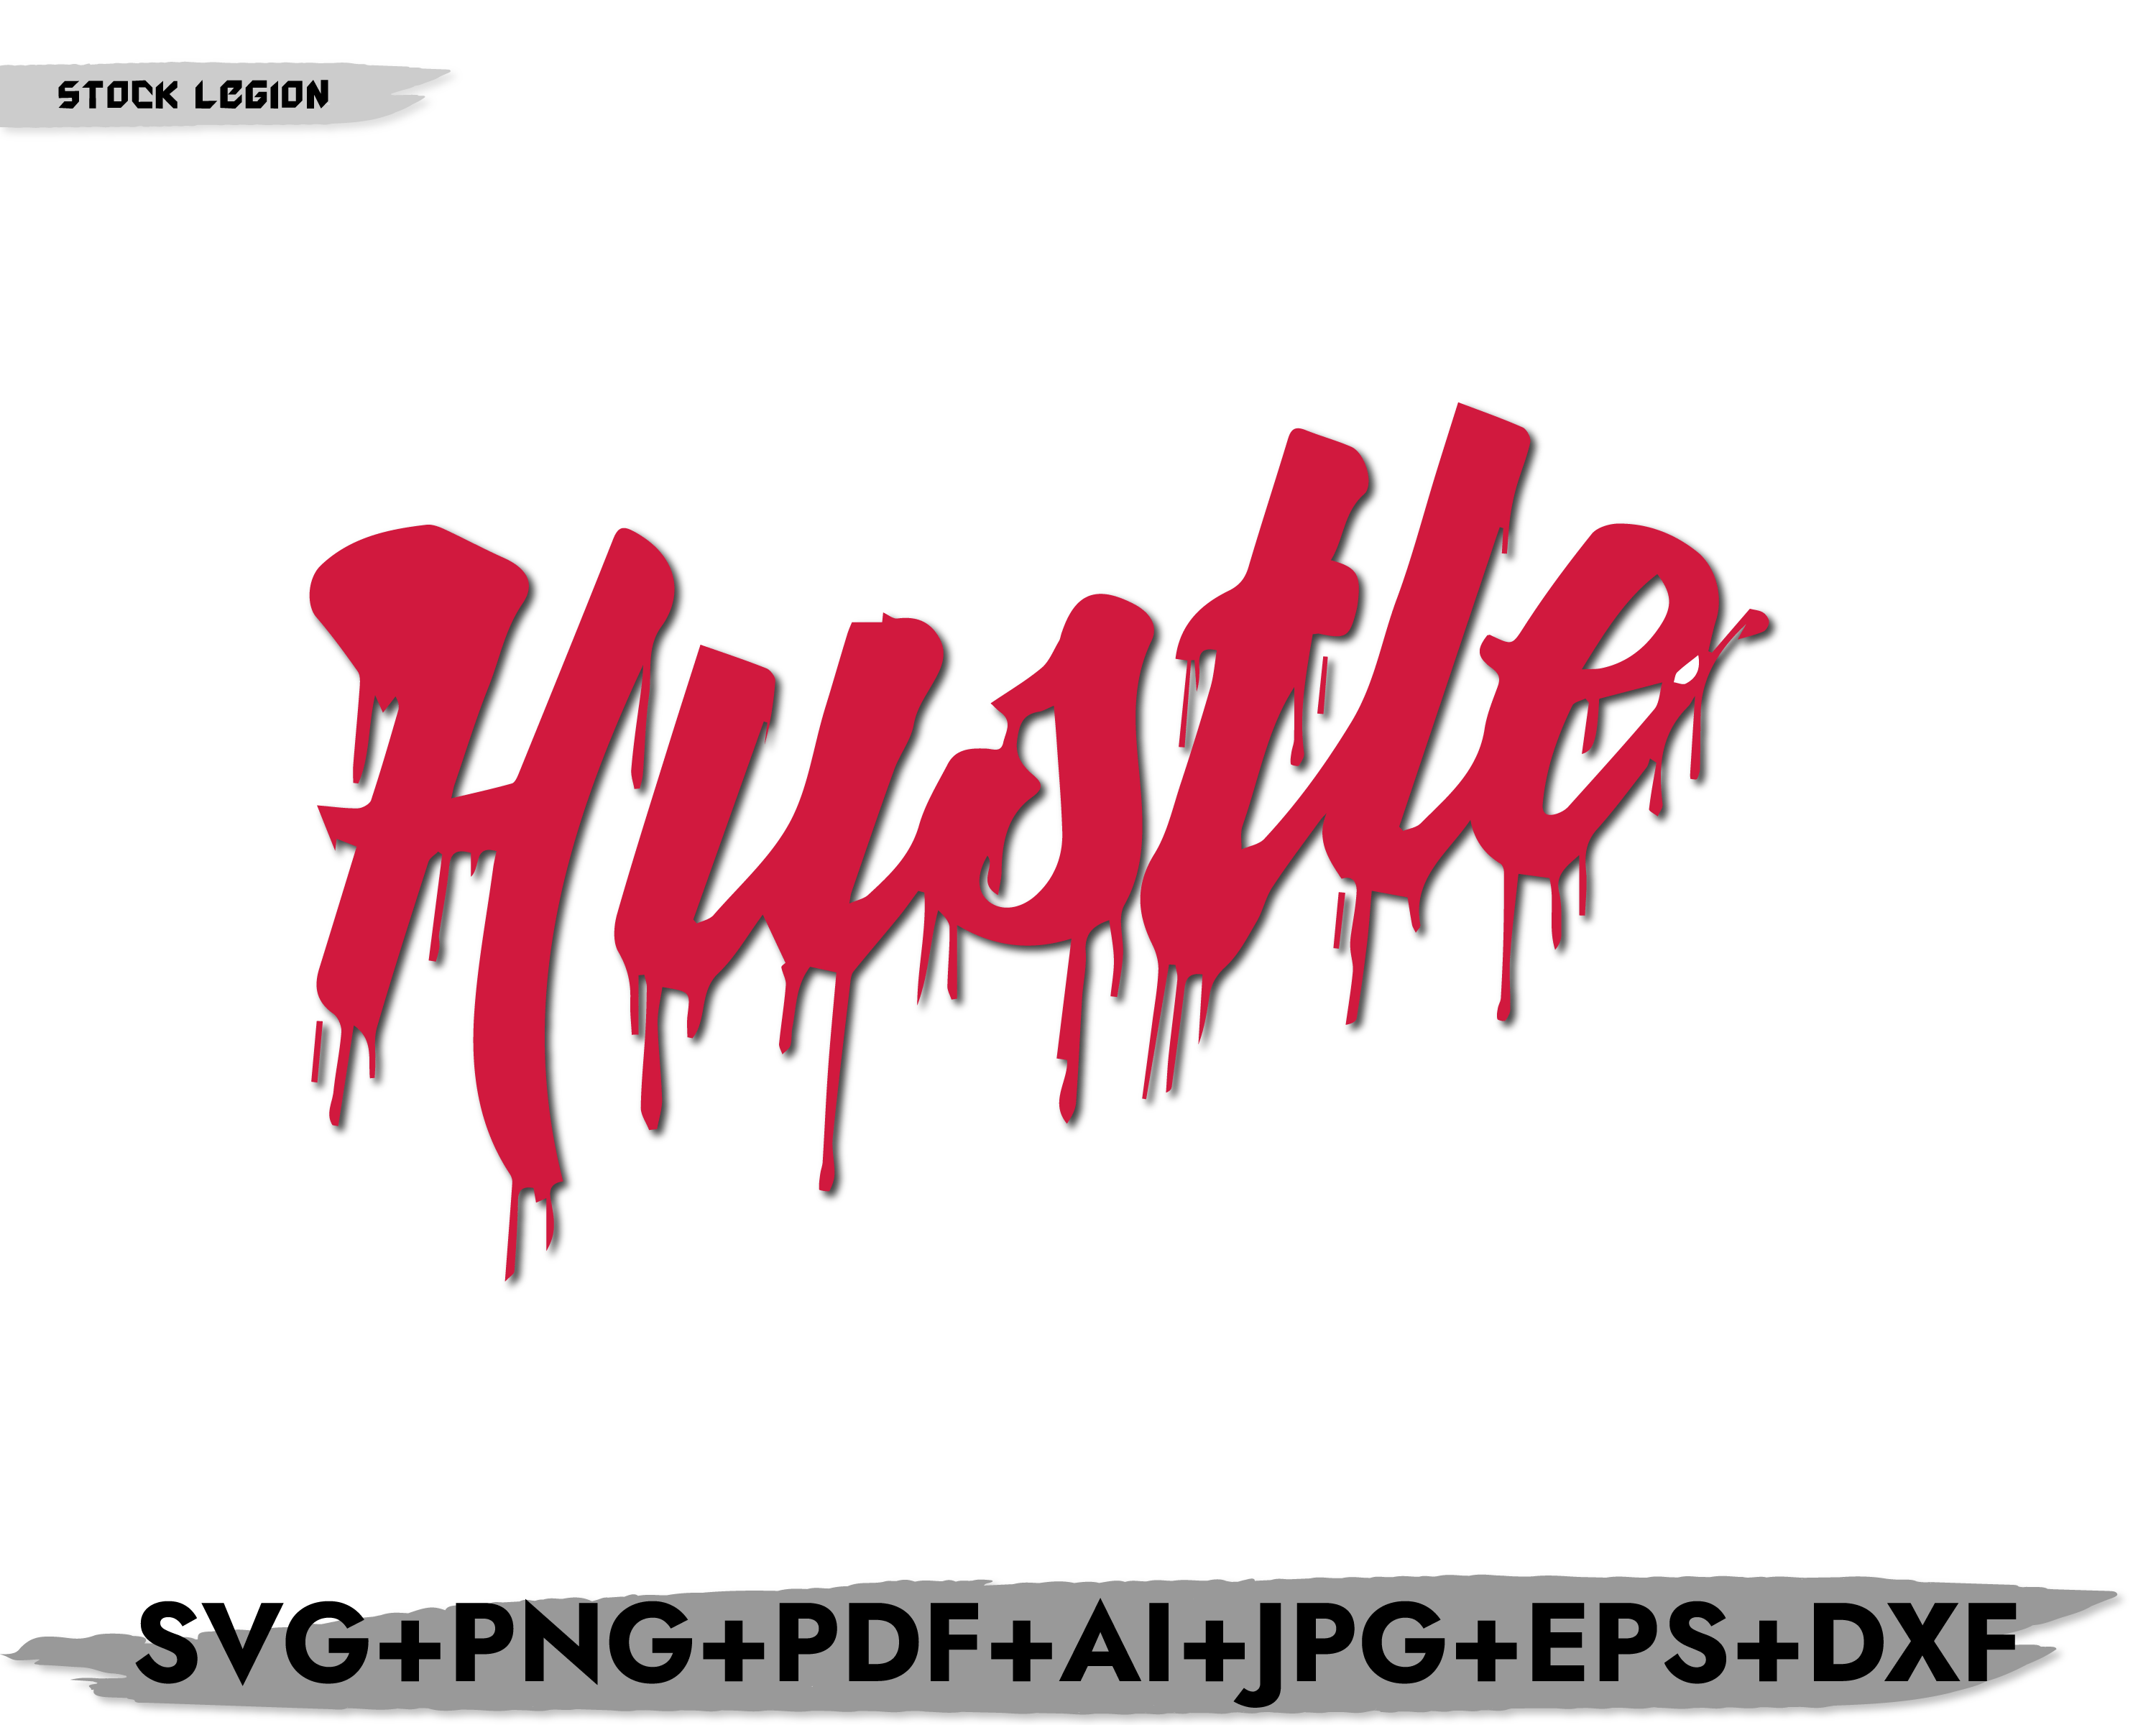 Drip Too Hard Dripping Hustle Money Cash Rich Ghetto Trap City Street Urban Thug Gangster Flaunt Flex Text Quote SVG Design Cut File Jpg PNG